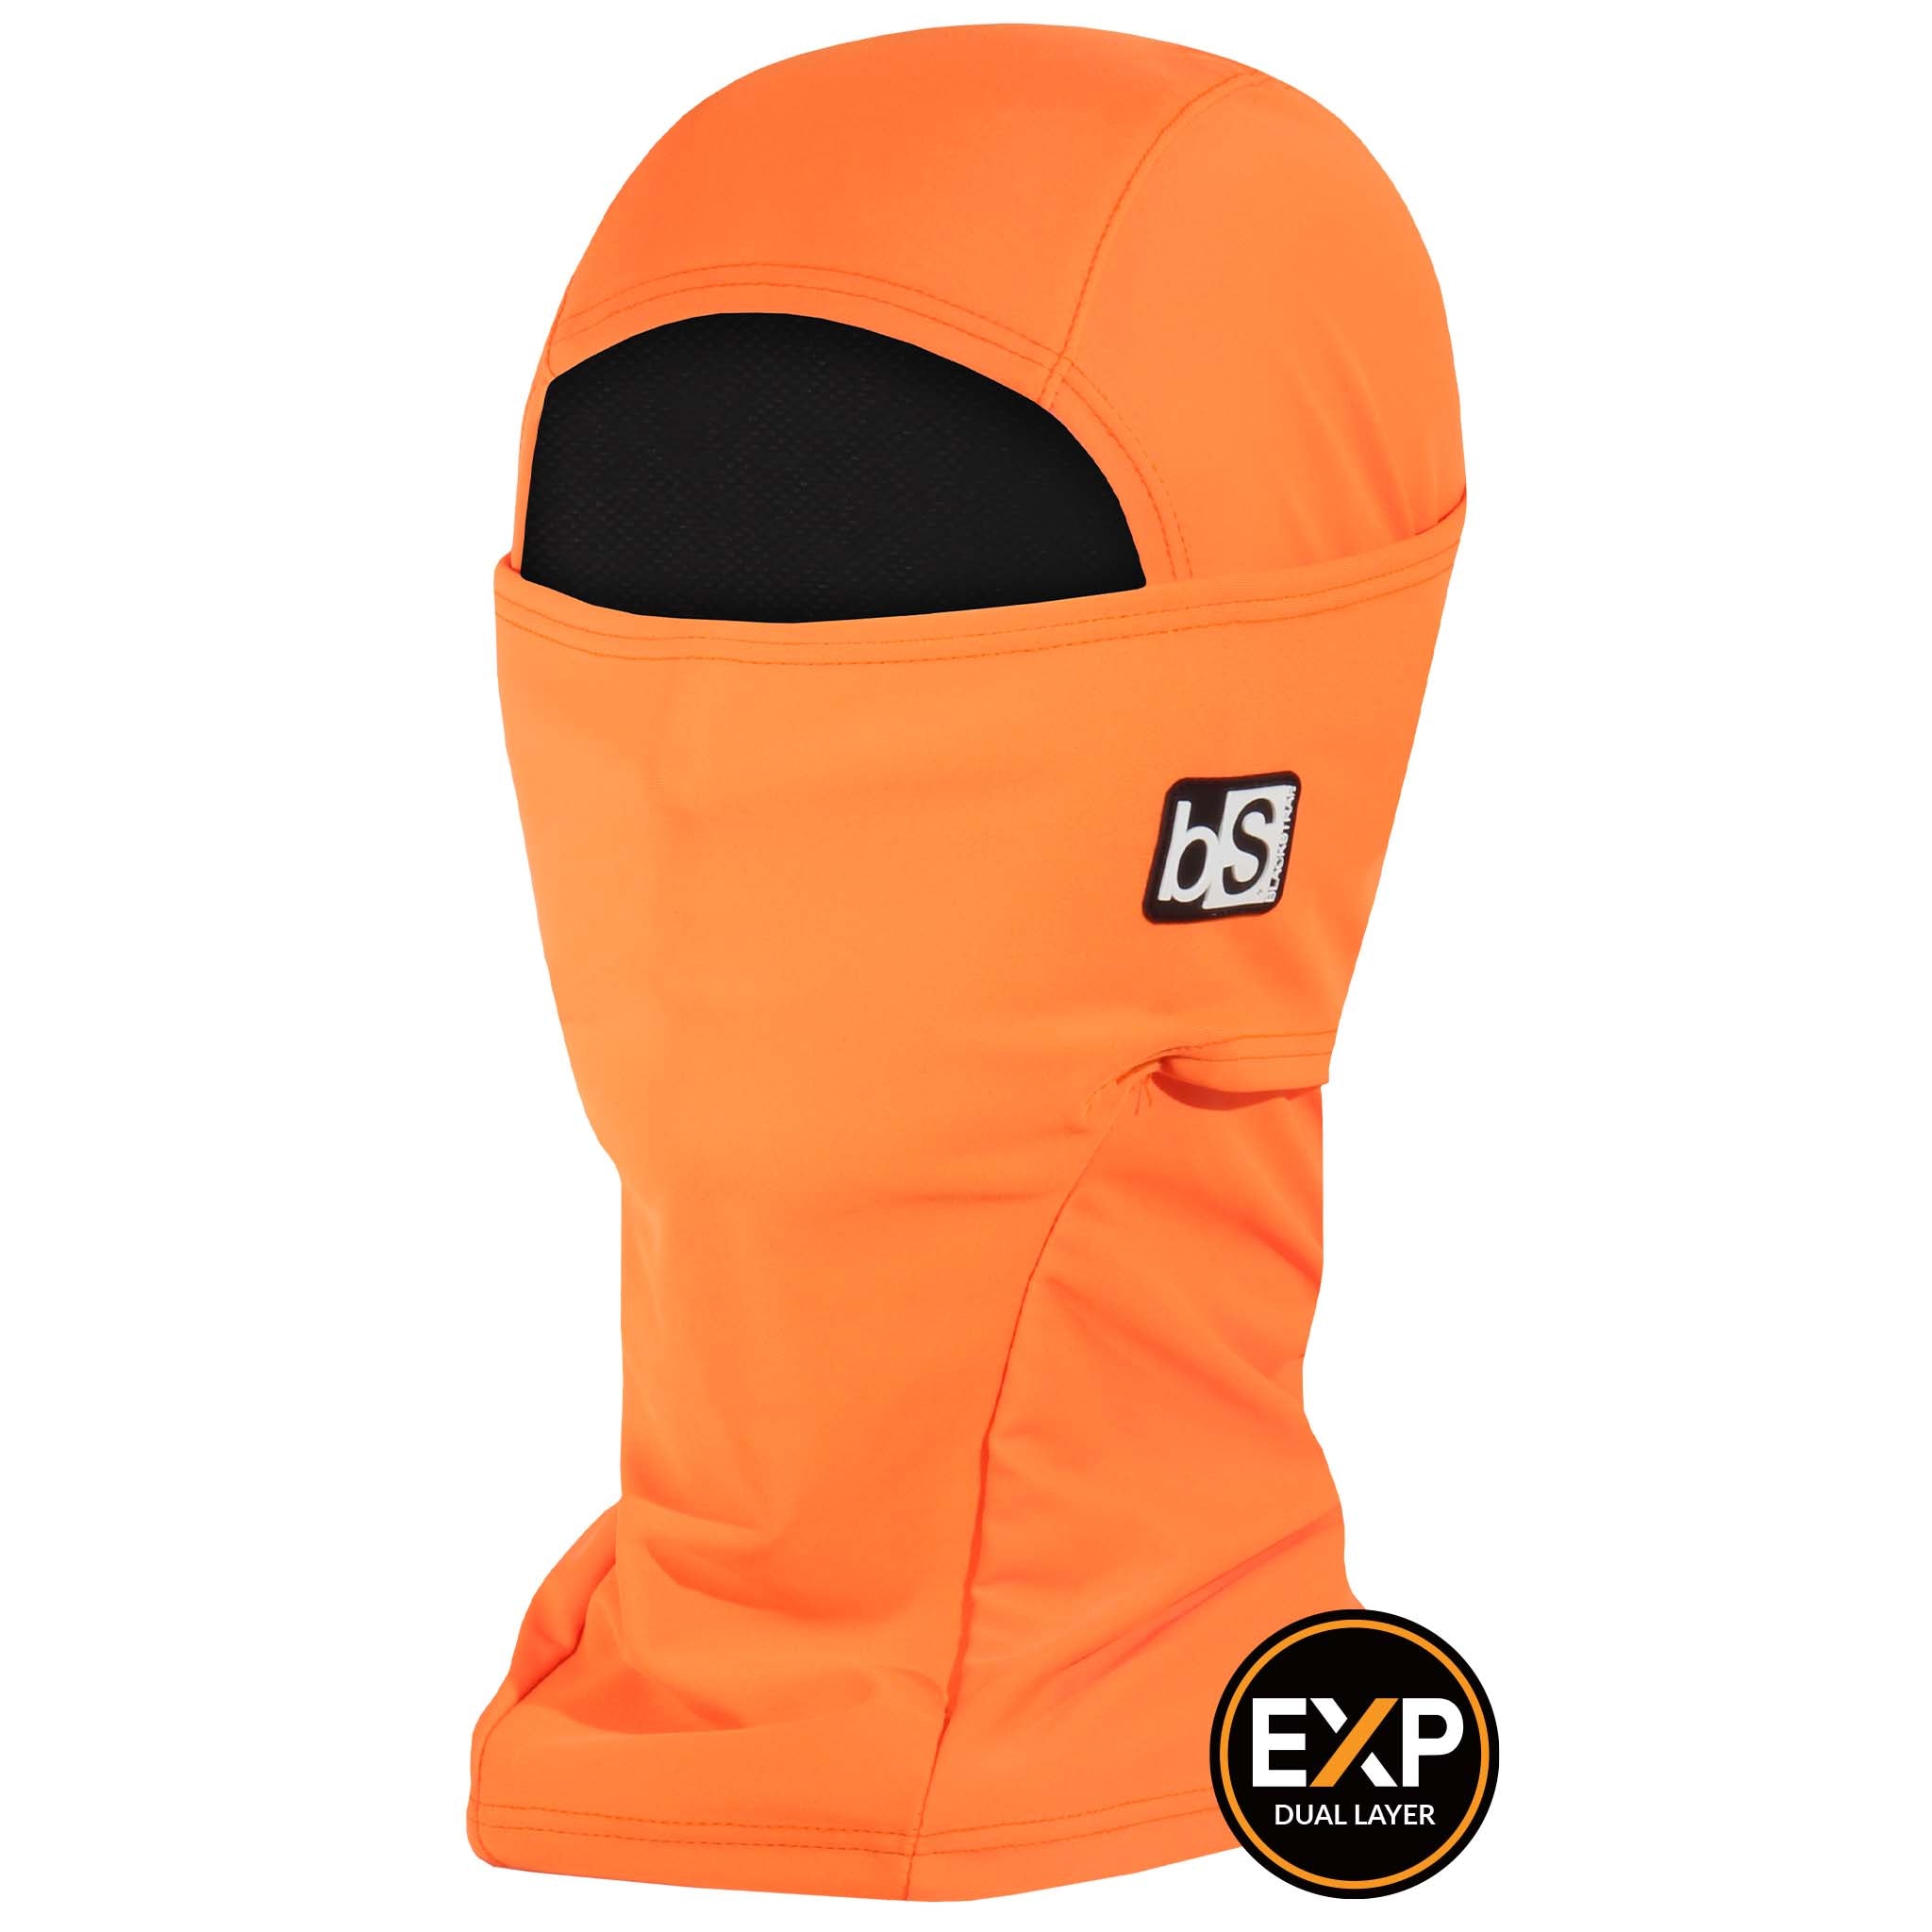 Expedition Hood Balaclava | Solids BlackStrap Bright Orange  